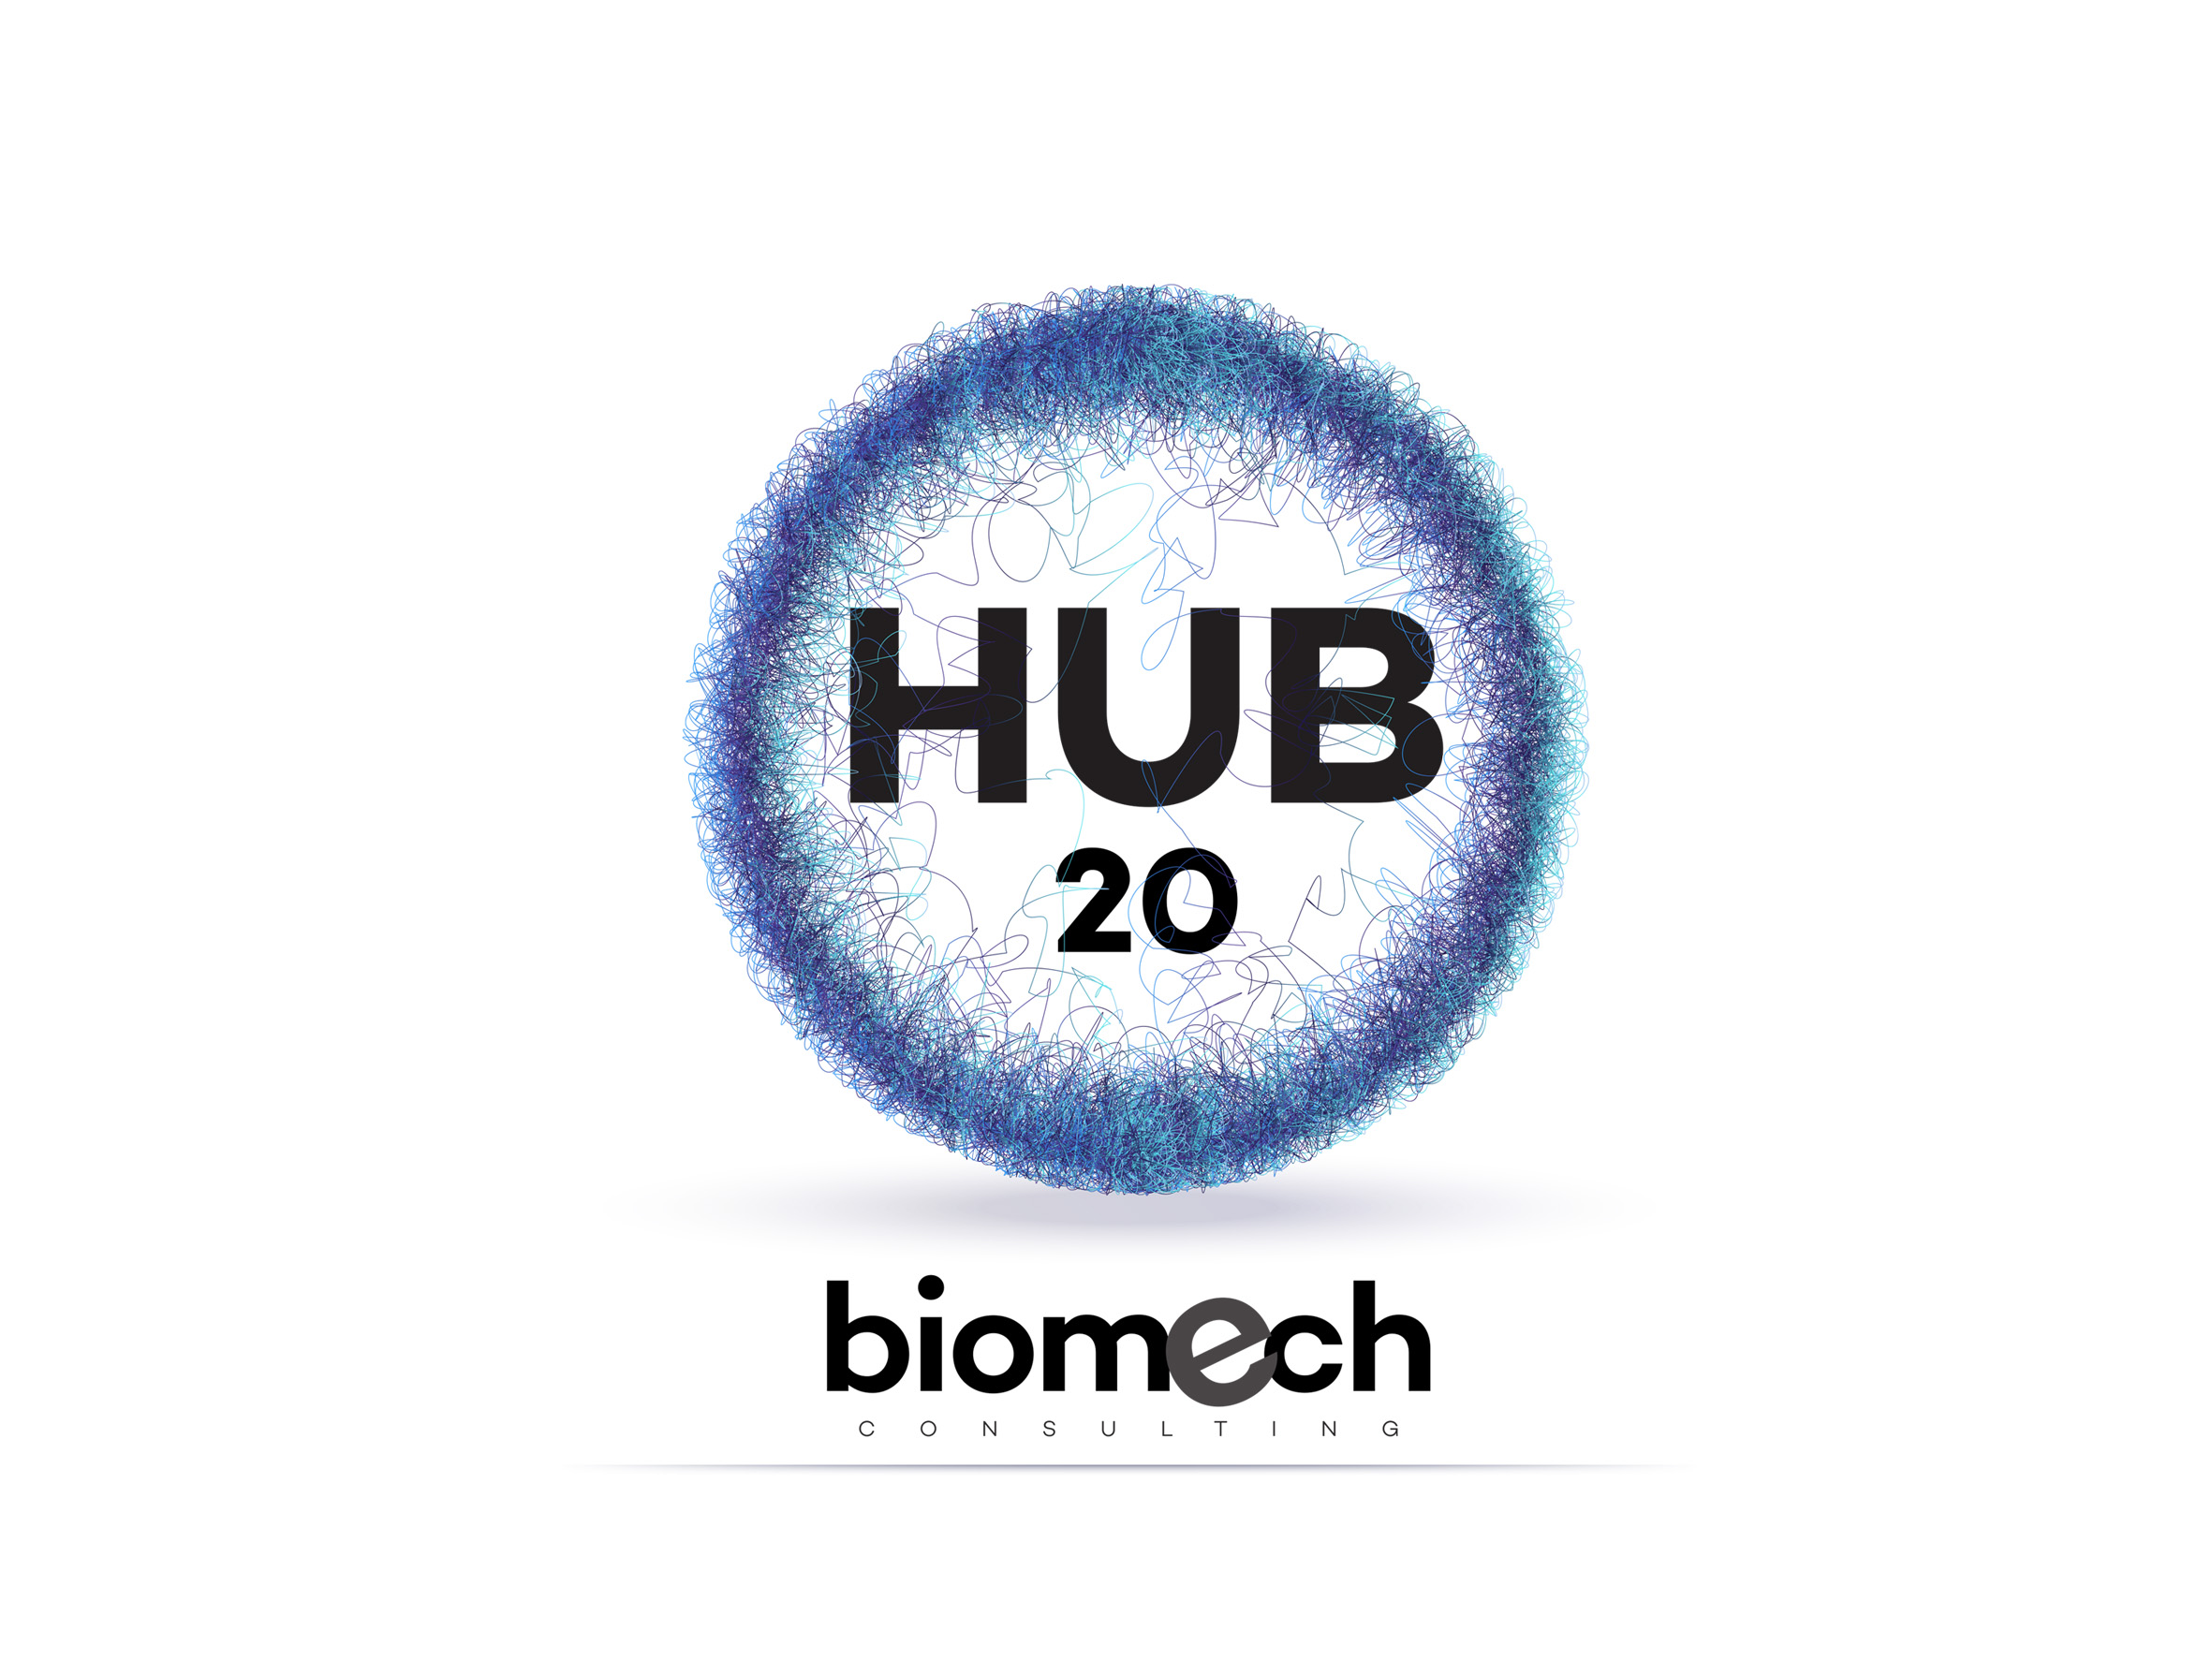 Conéctate al Hub Biomech Consulting